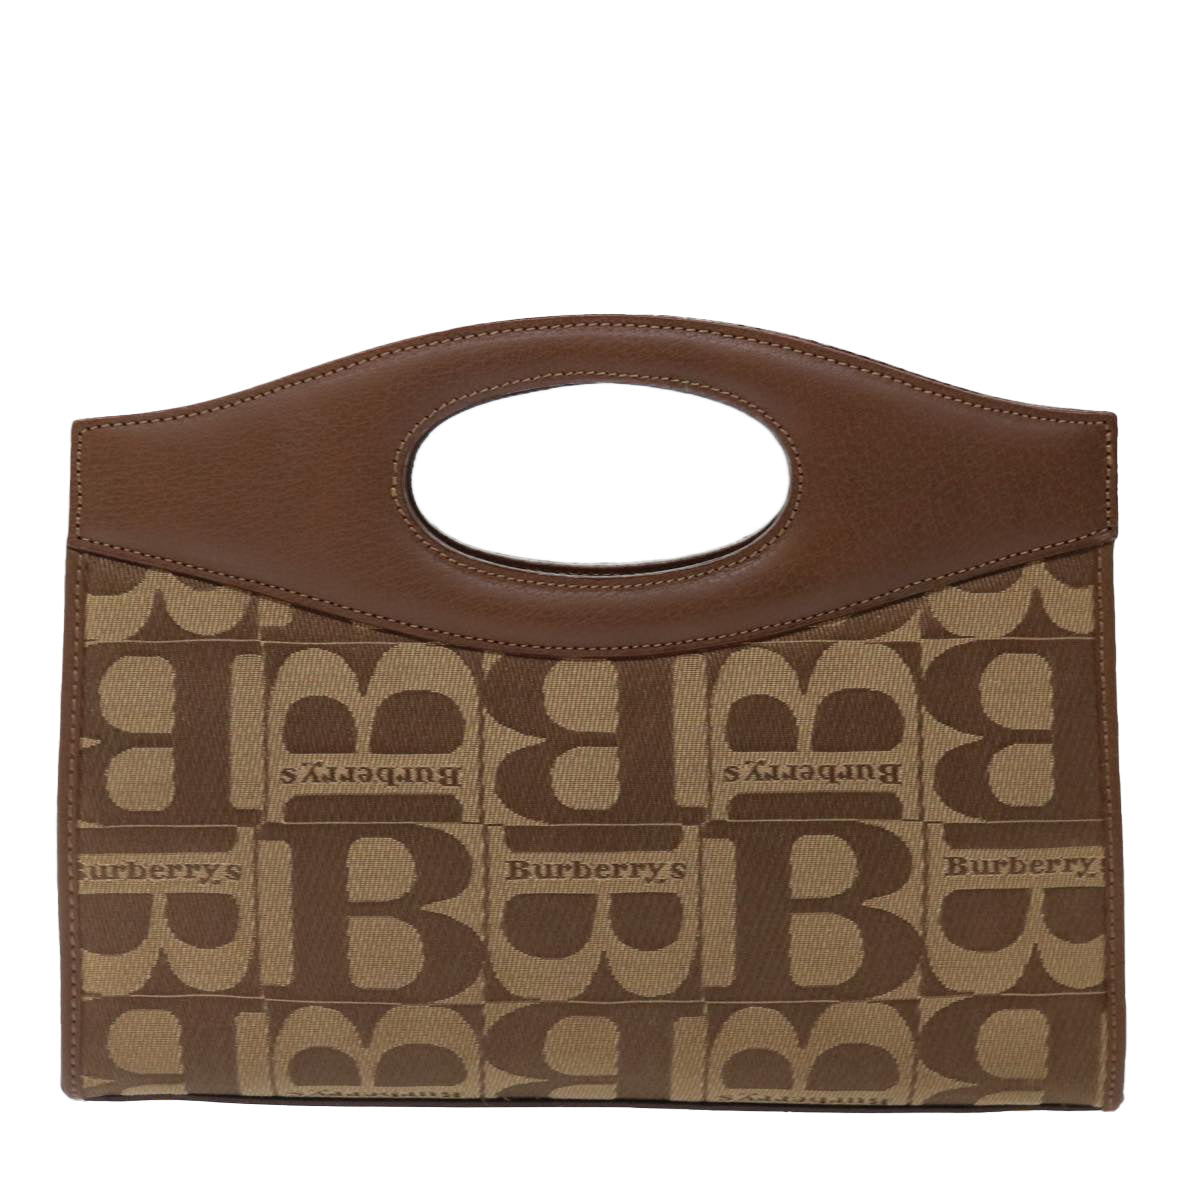 Burberrys Hand Bag Canvas Beige Brown Auth ac2851 - 0